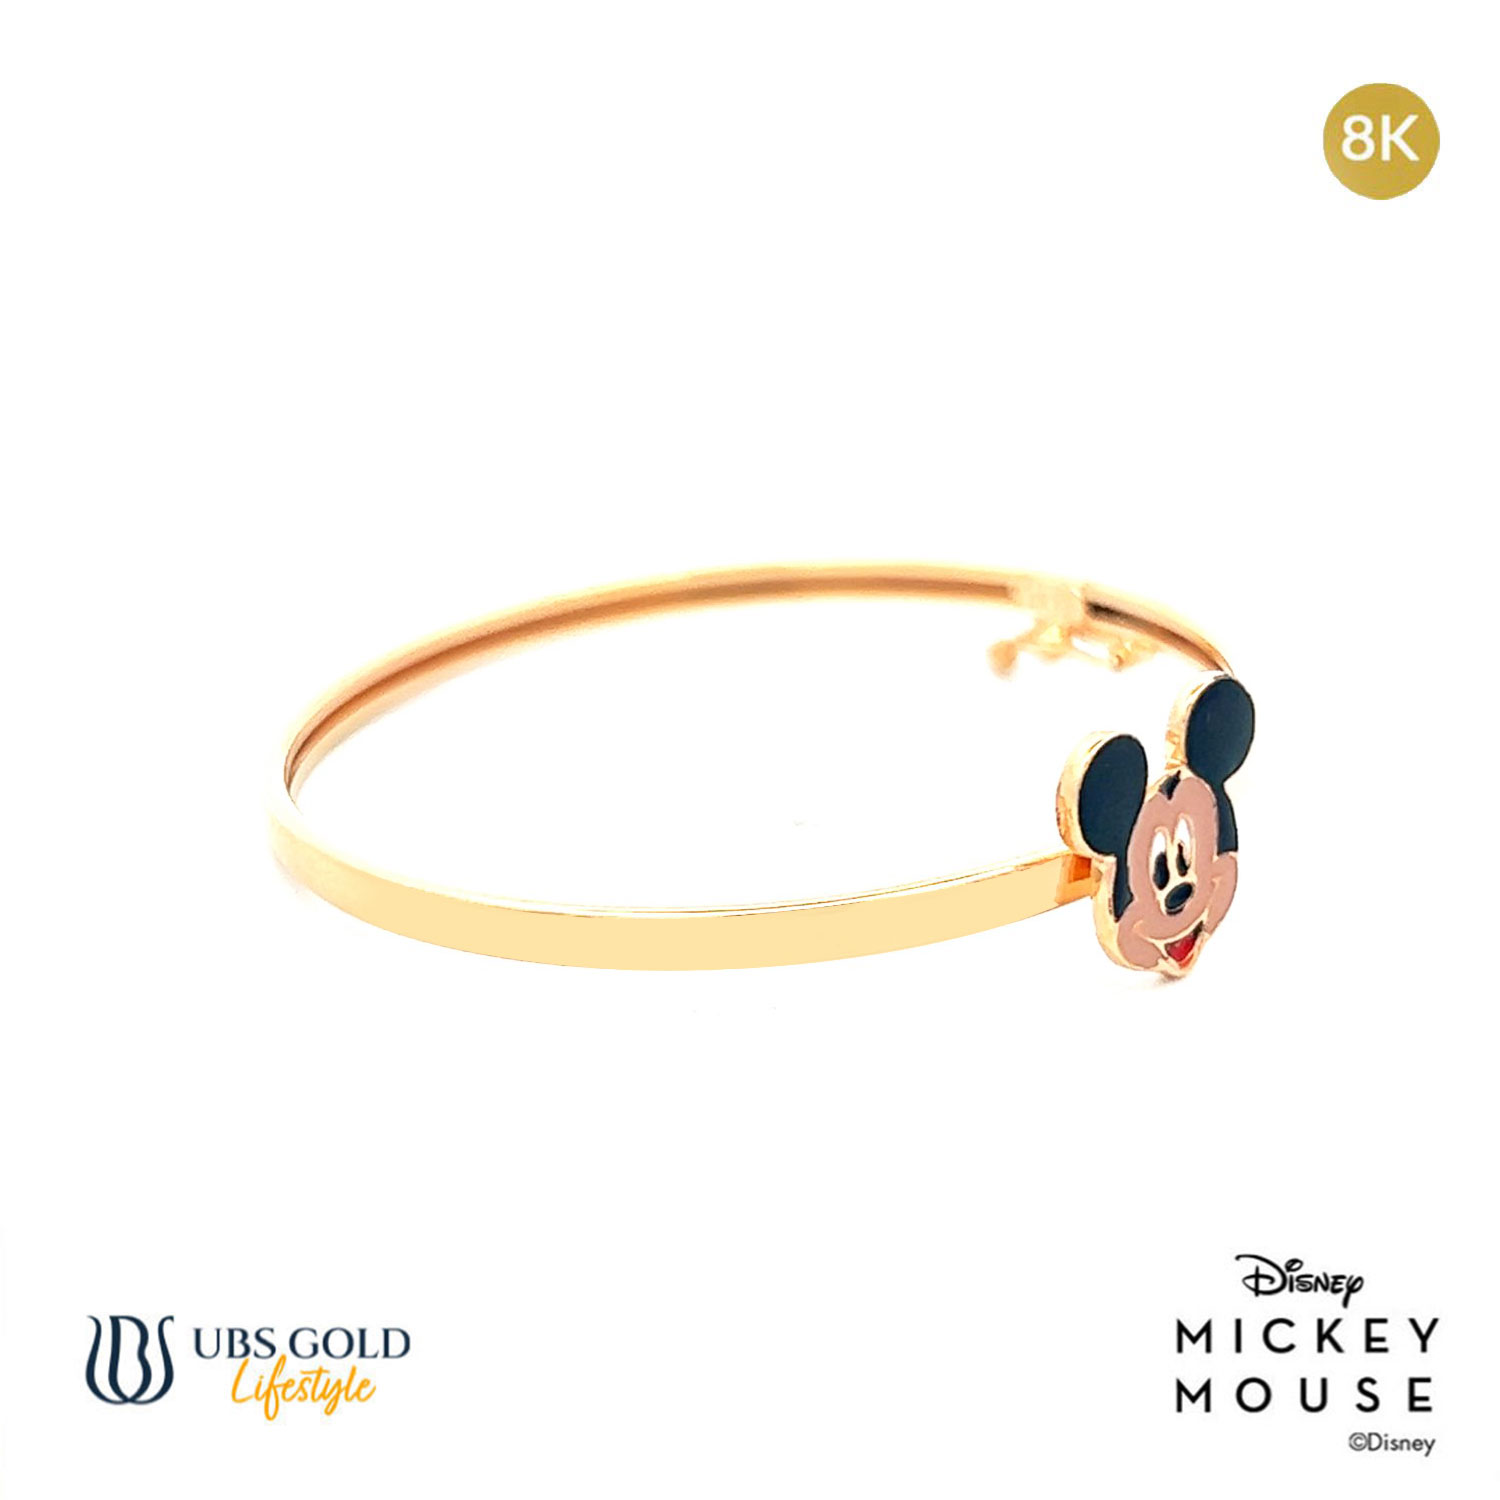 UBS Gold Gelang Emas Bayi Disney Mickey Mouse - Vgy0007K - 8K